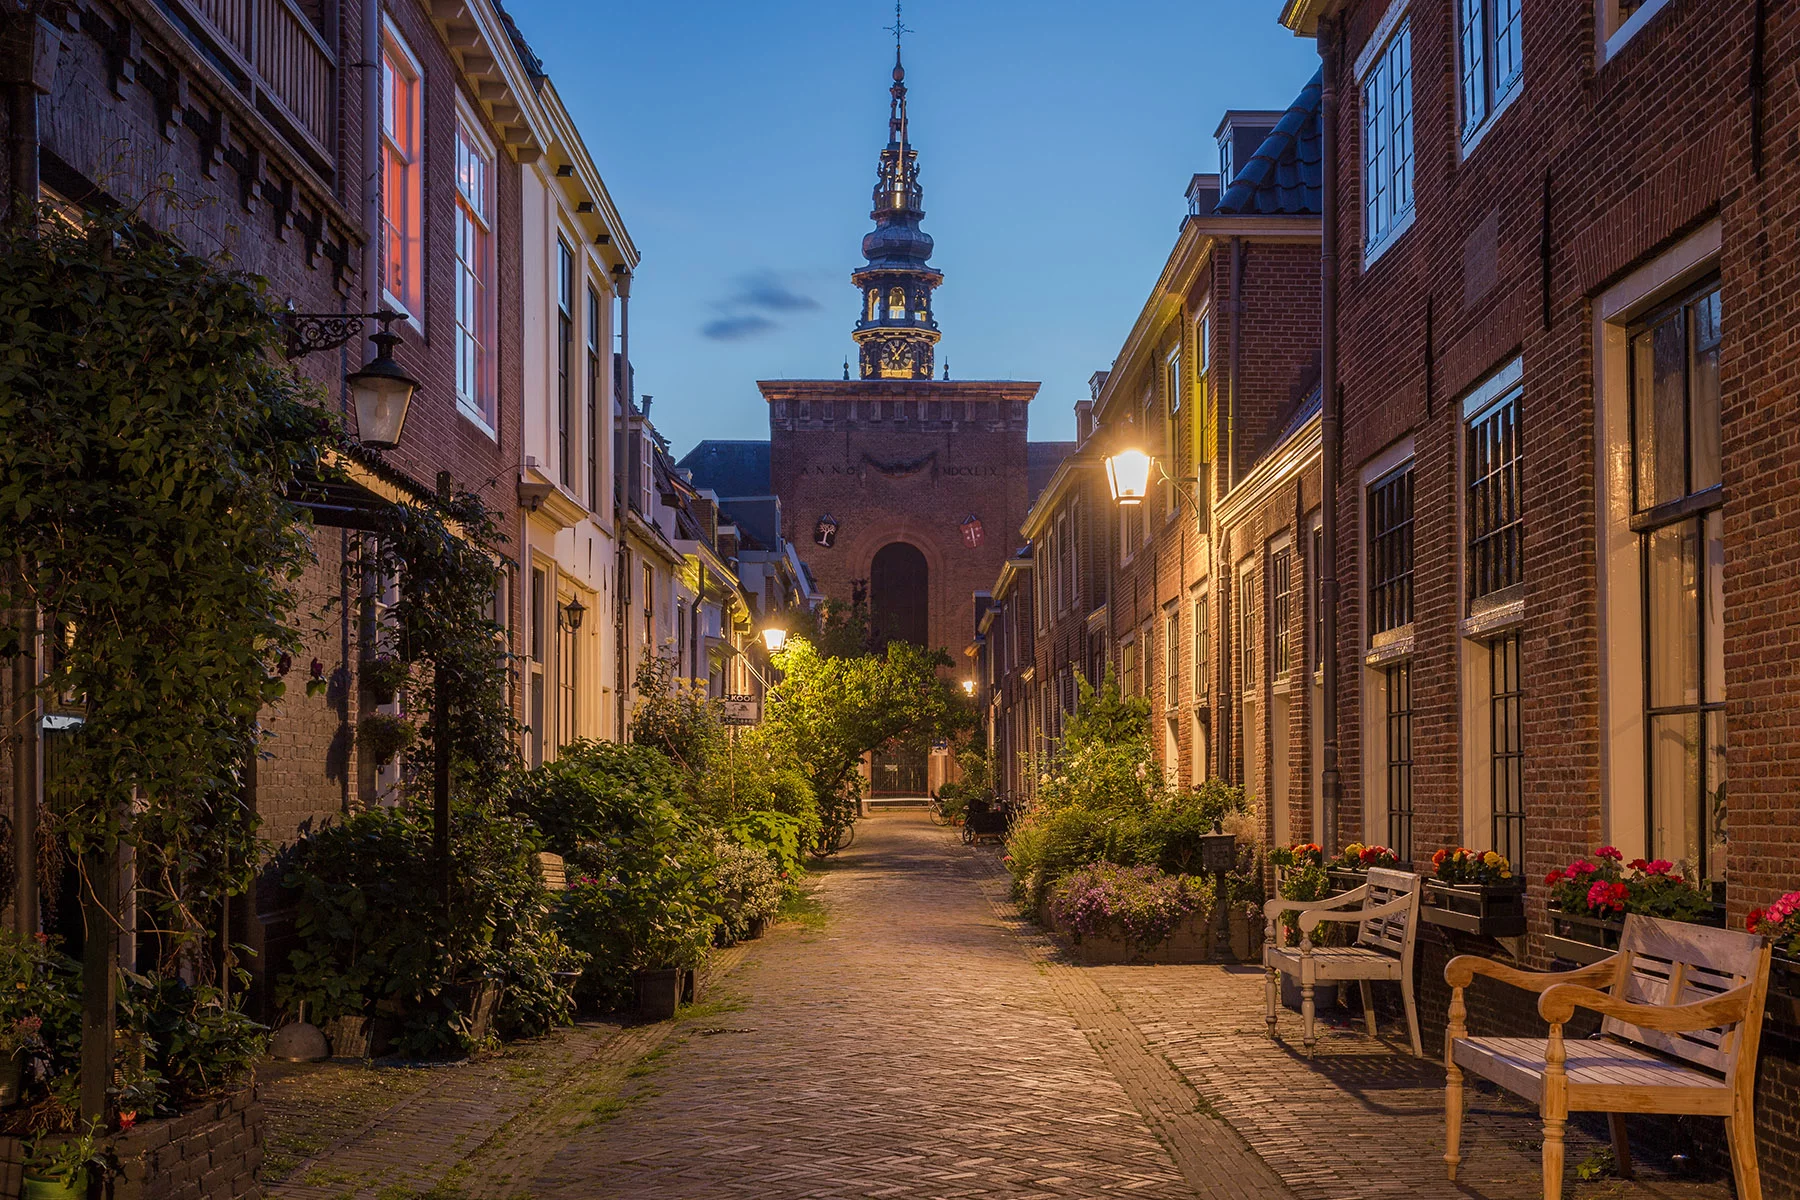 Quaint street in the city center of Haarlem at dusk